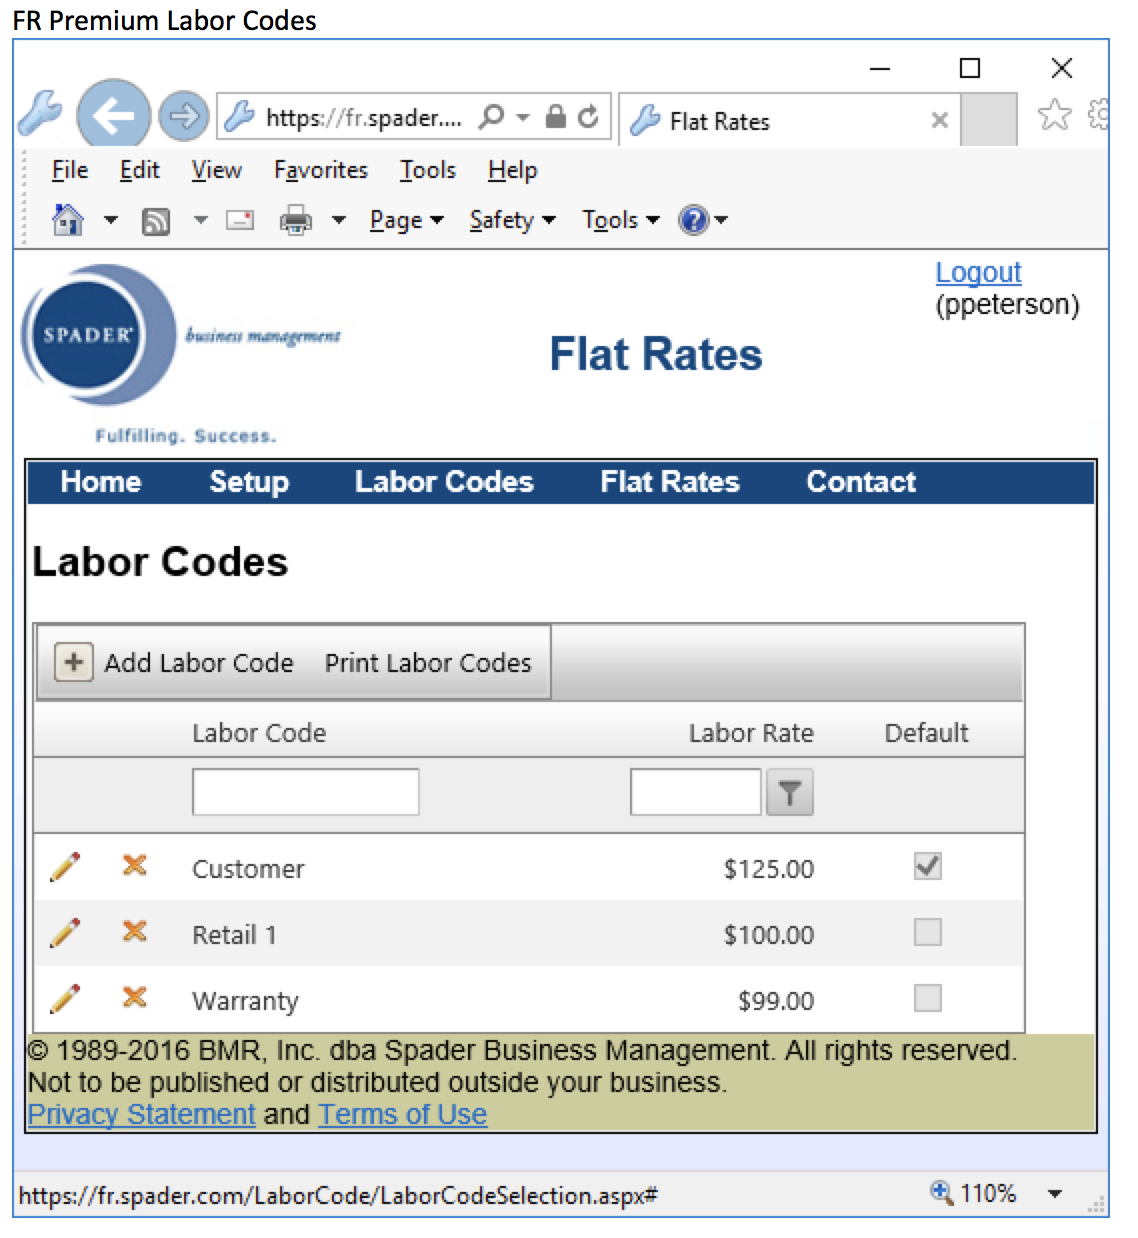 Flat Rates Online (includes digital download) - FR Premium Labor CoDes